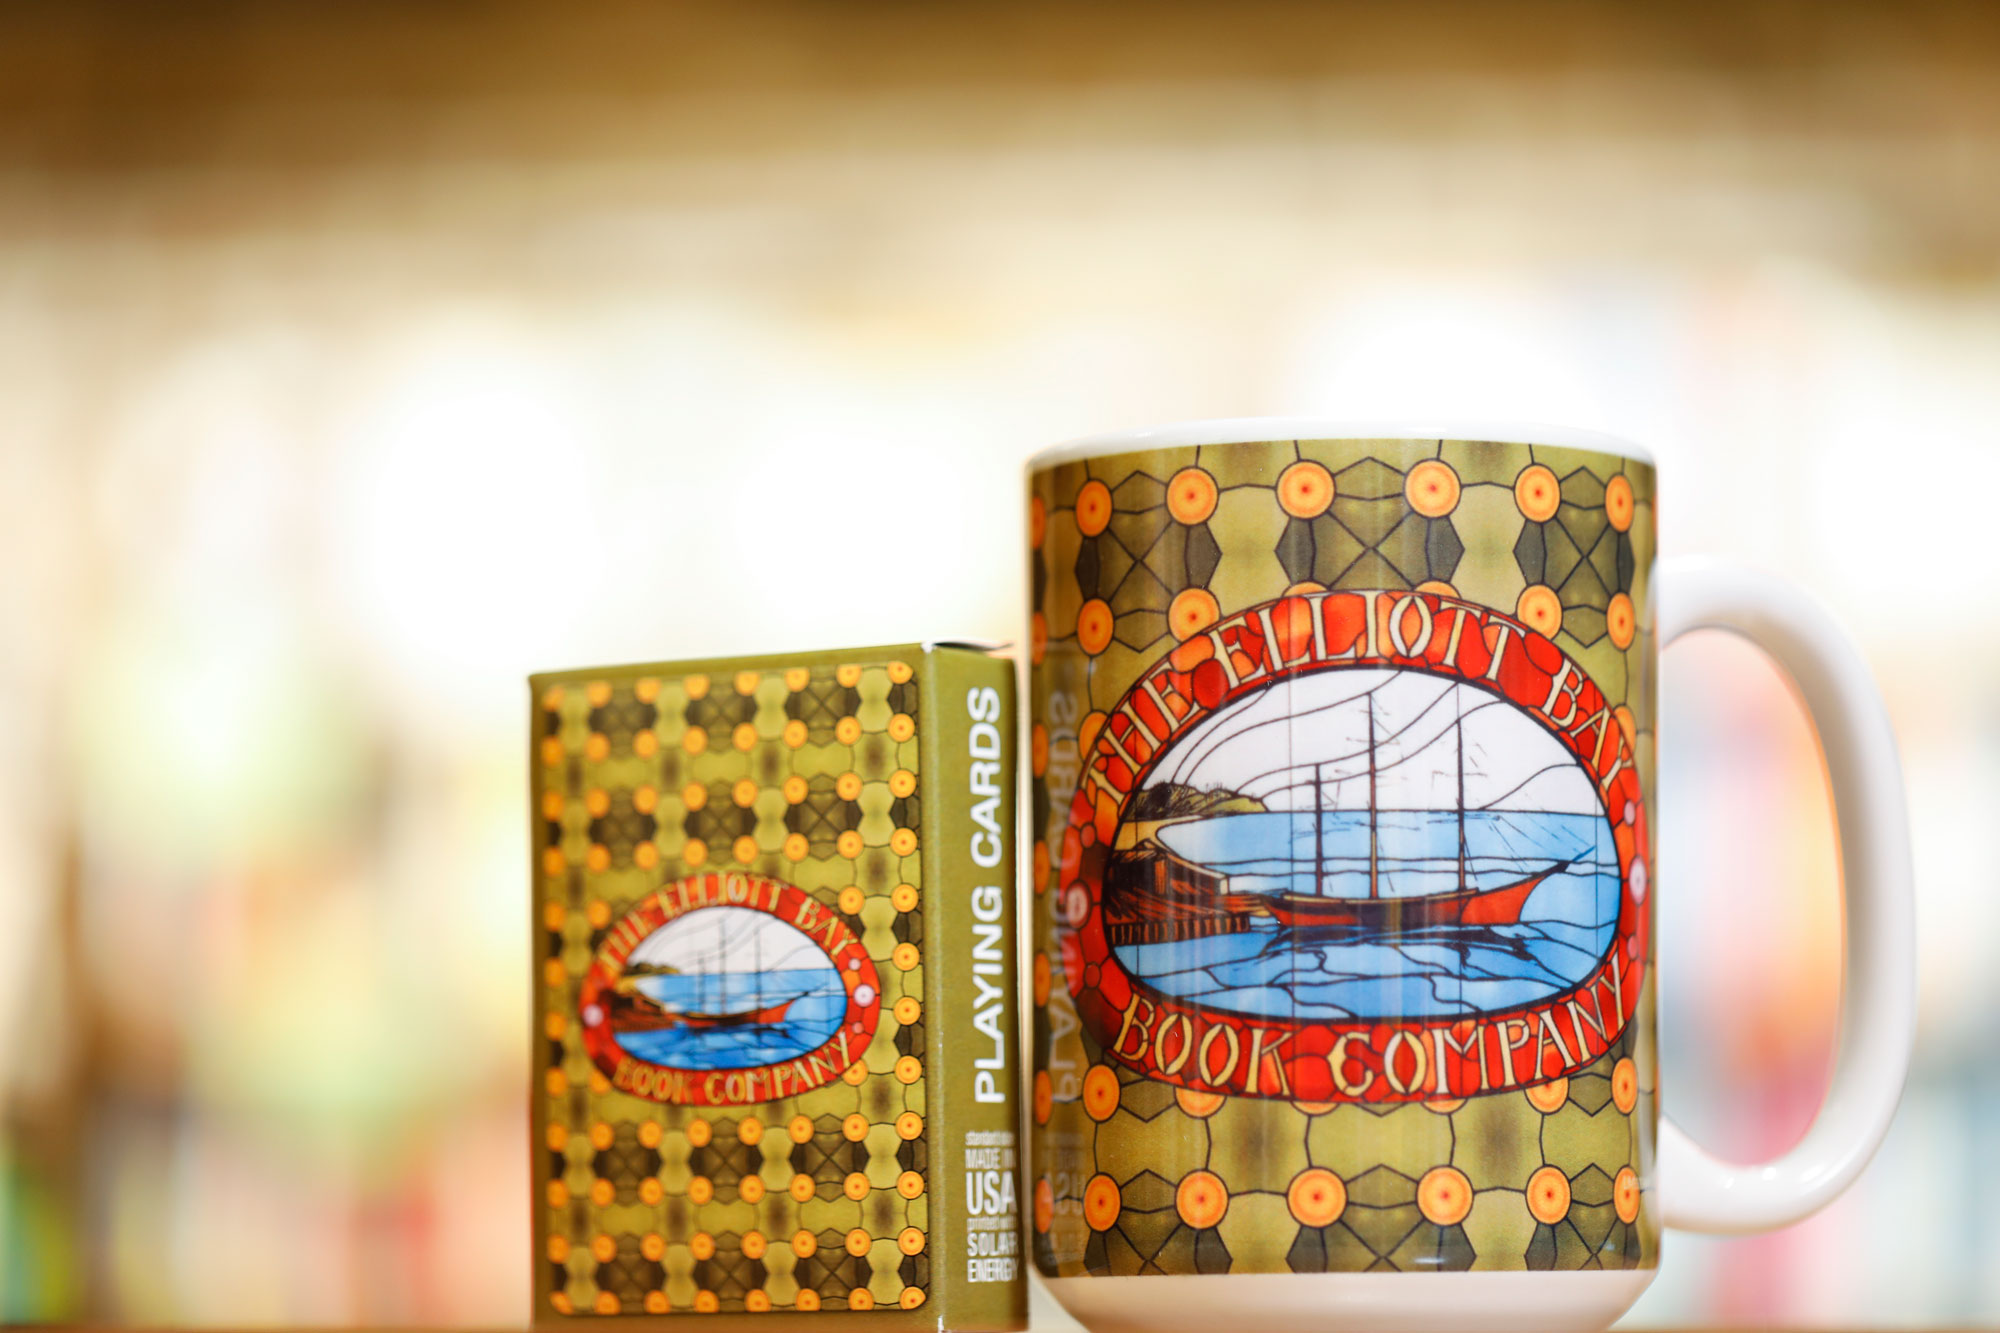 SEA Elliott Bay Book Company Playing Cards and Mug